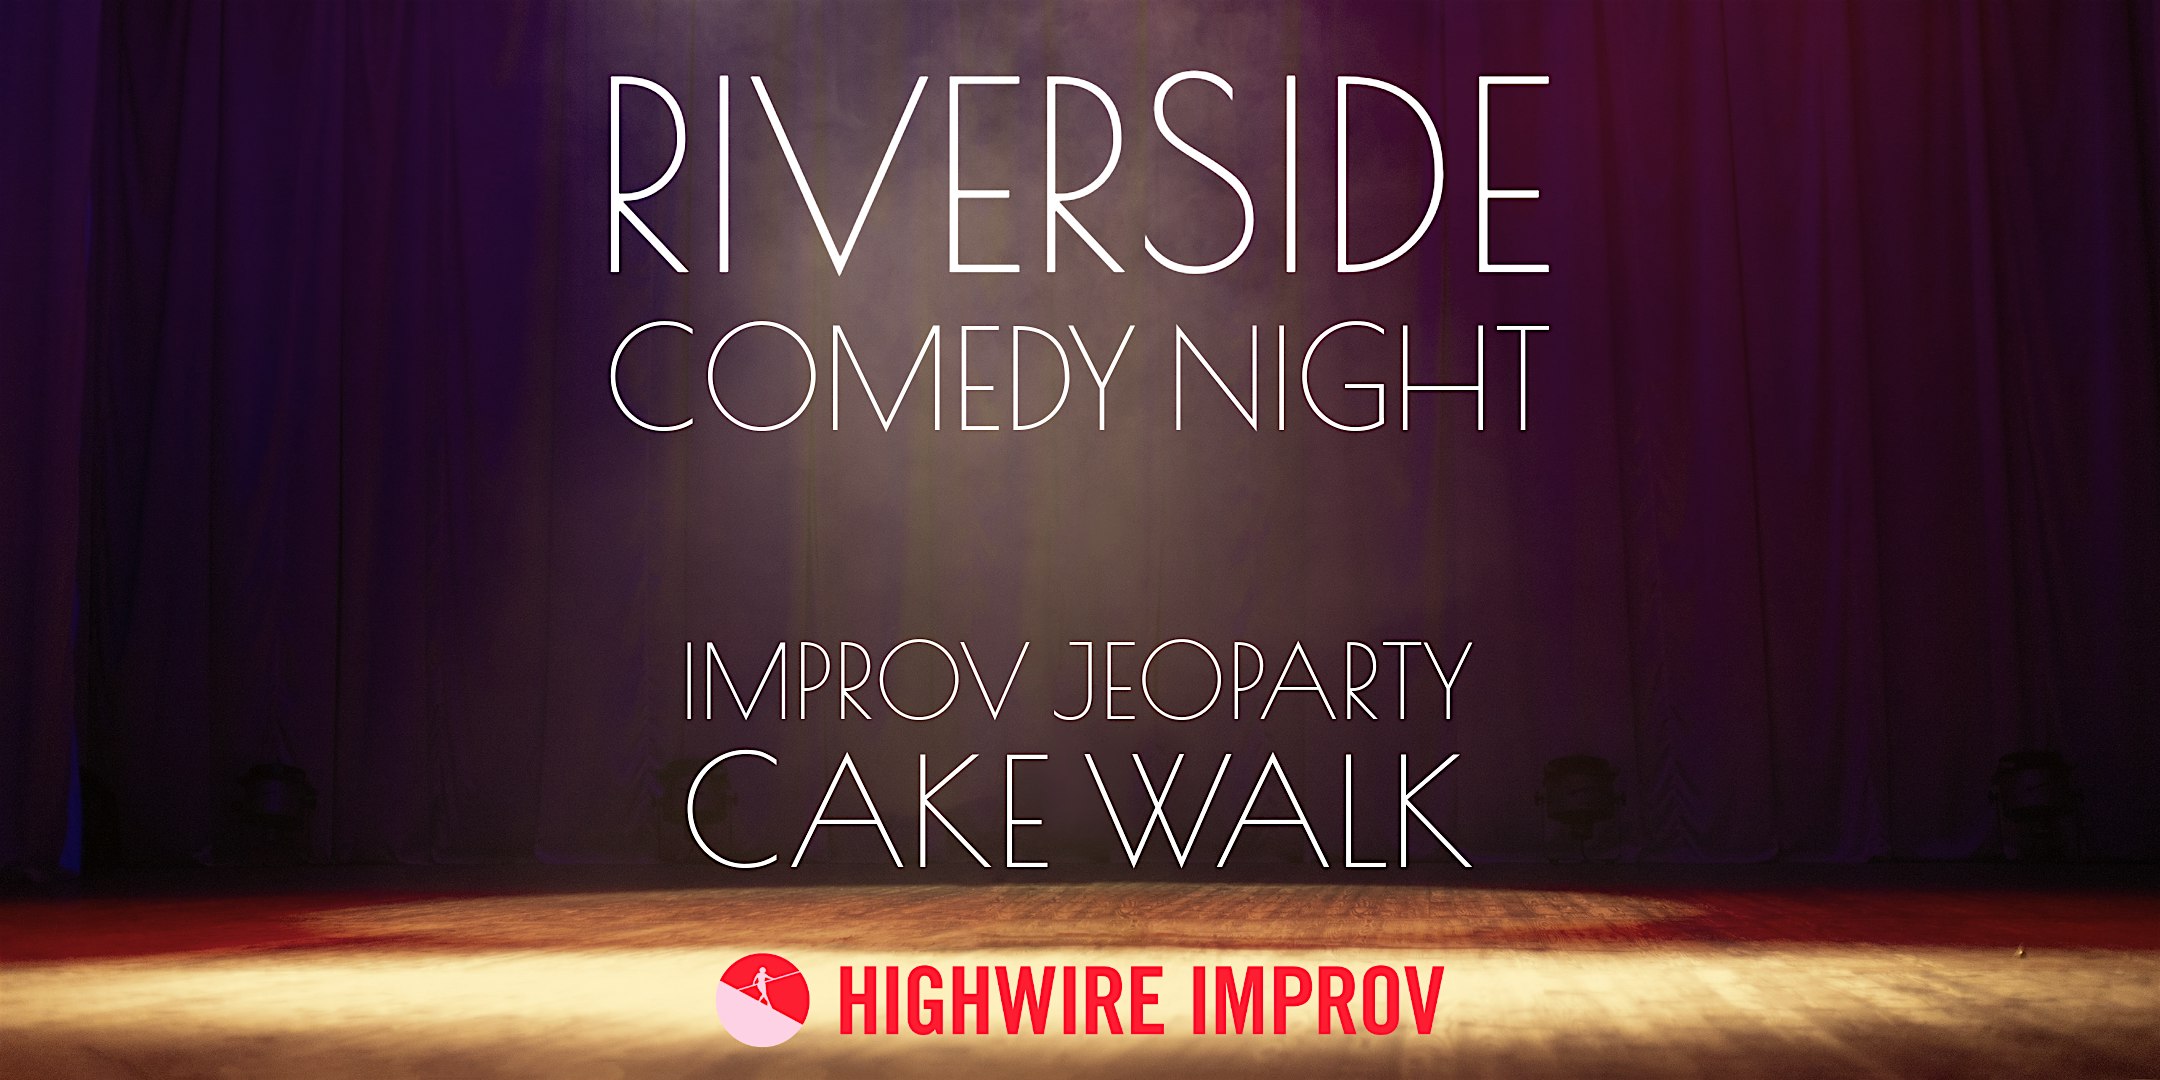 Riverside Comedy Night